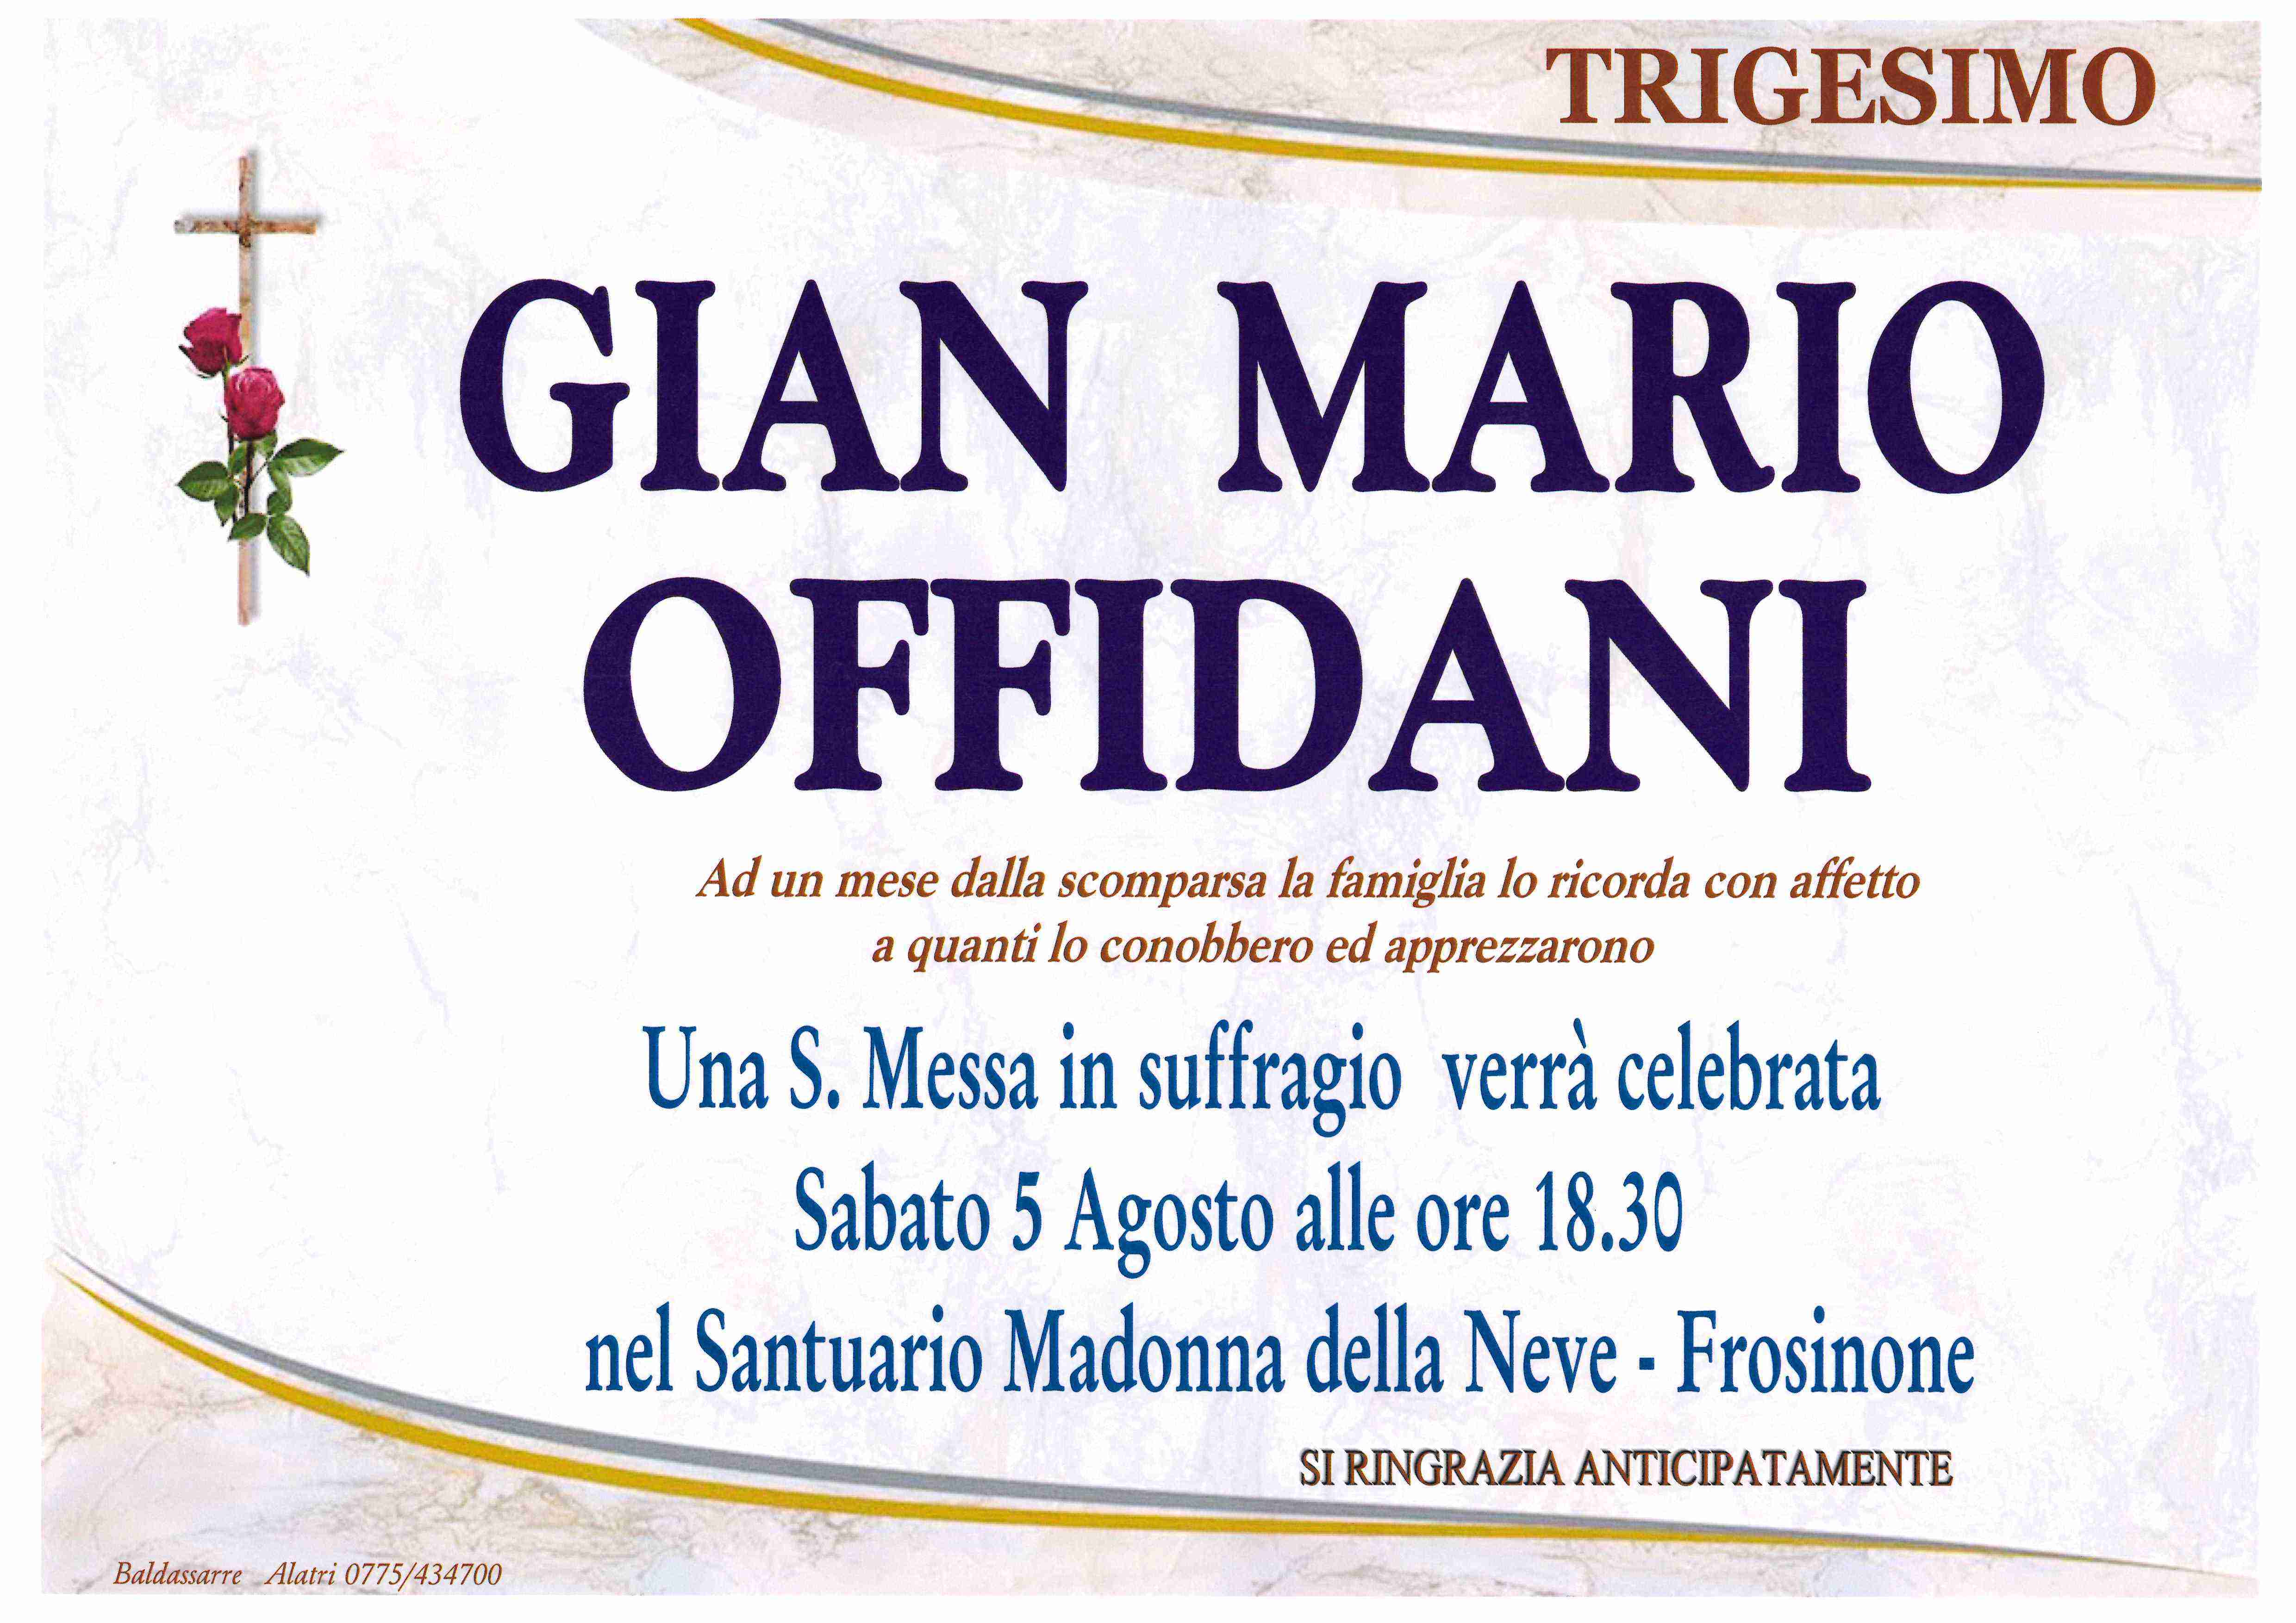 Gian Mario Offidani